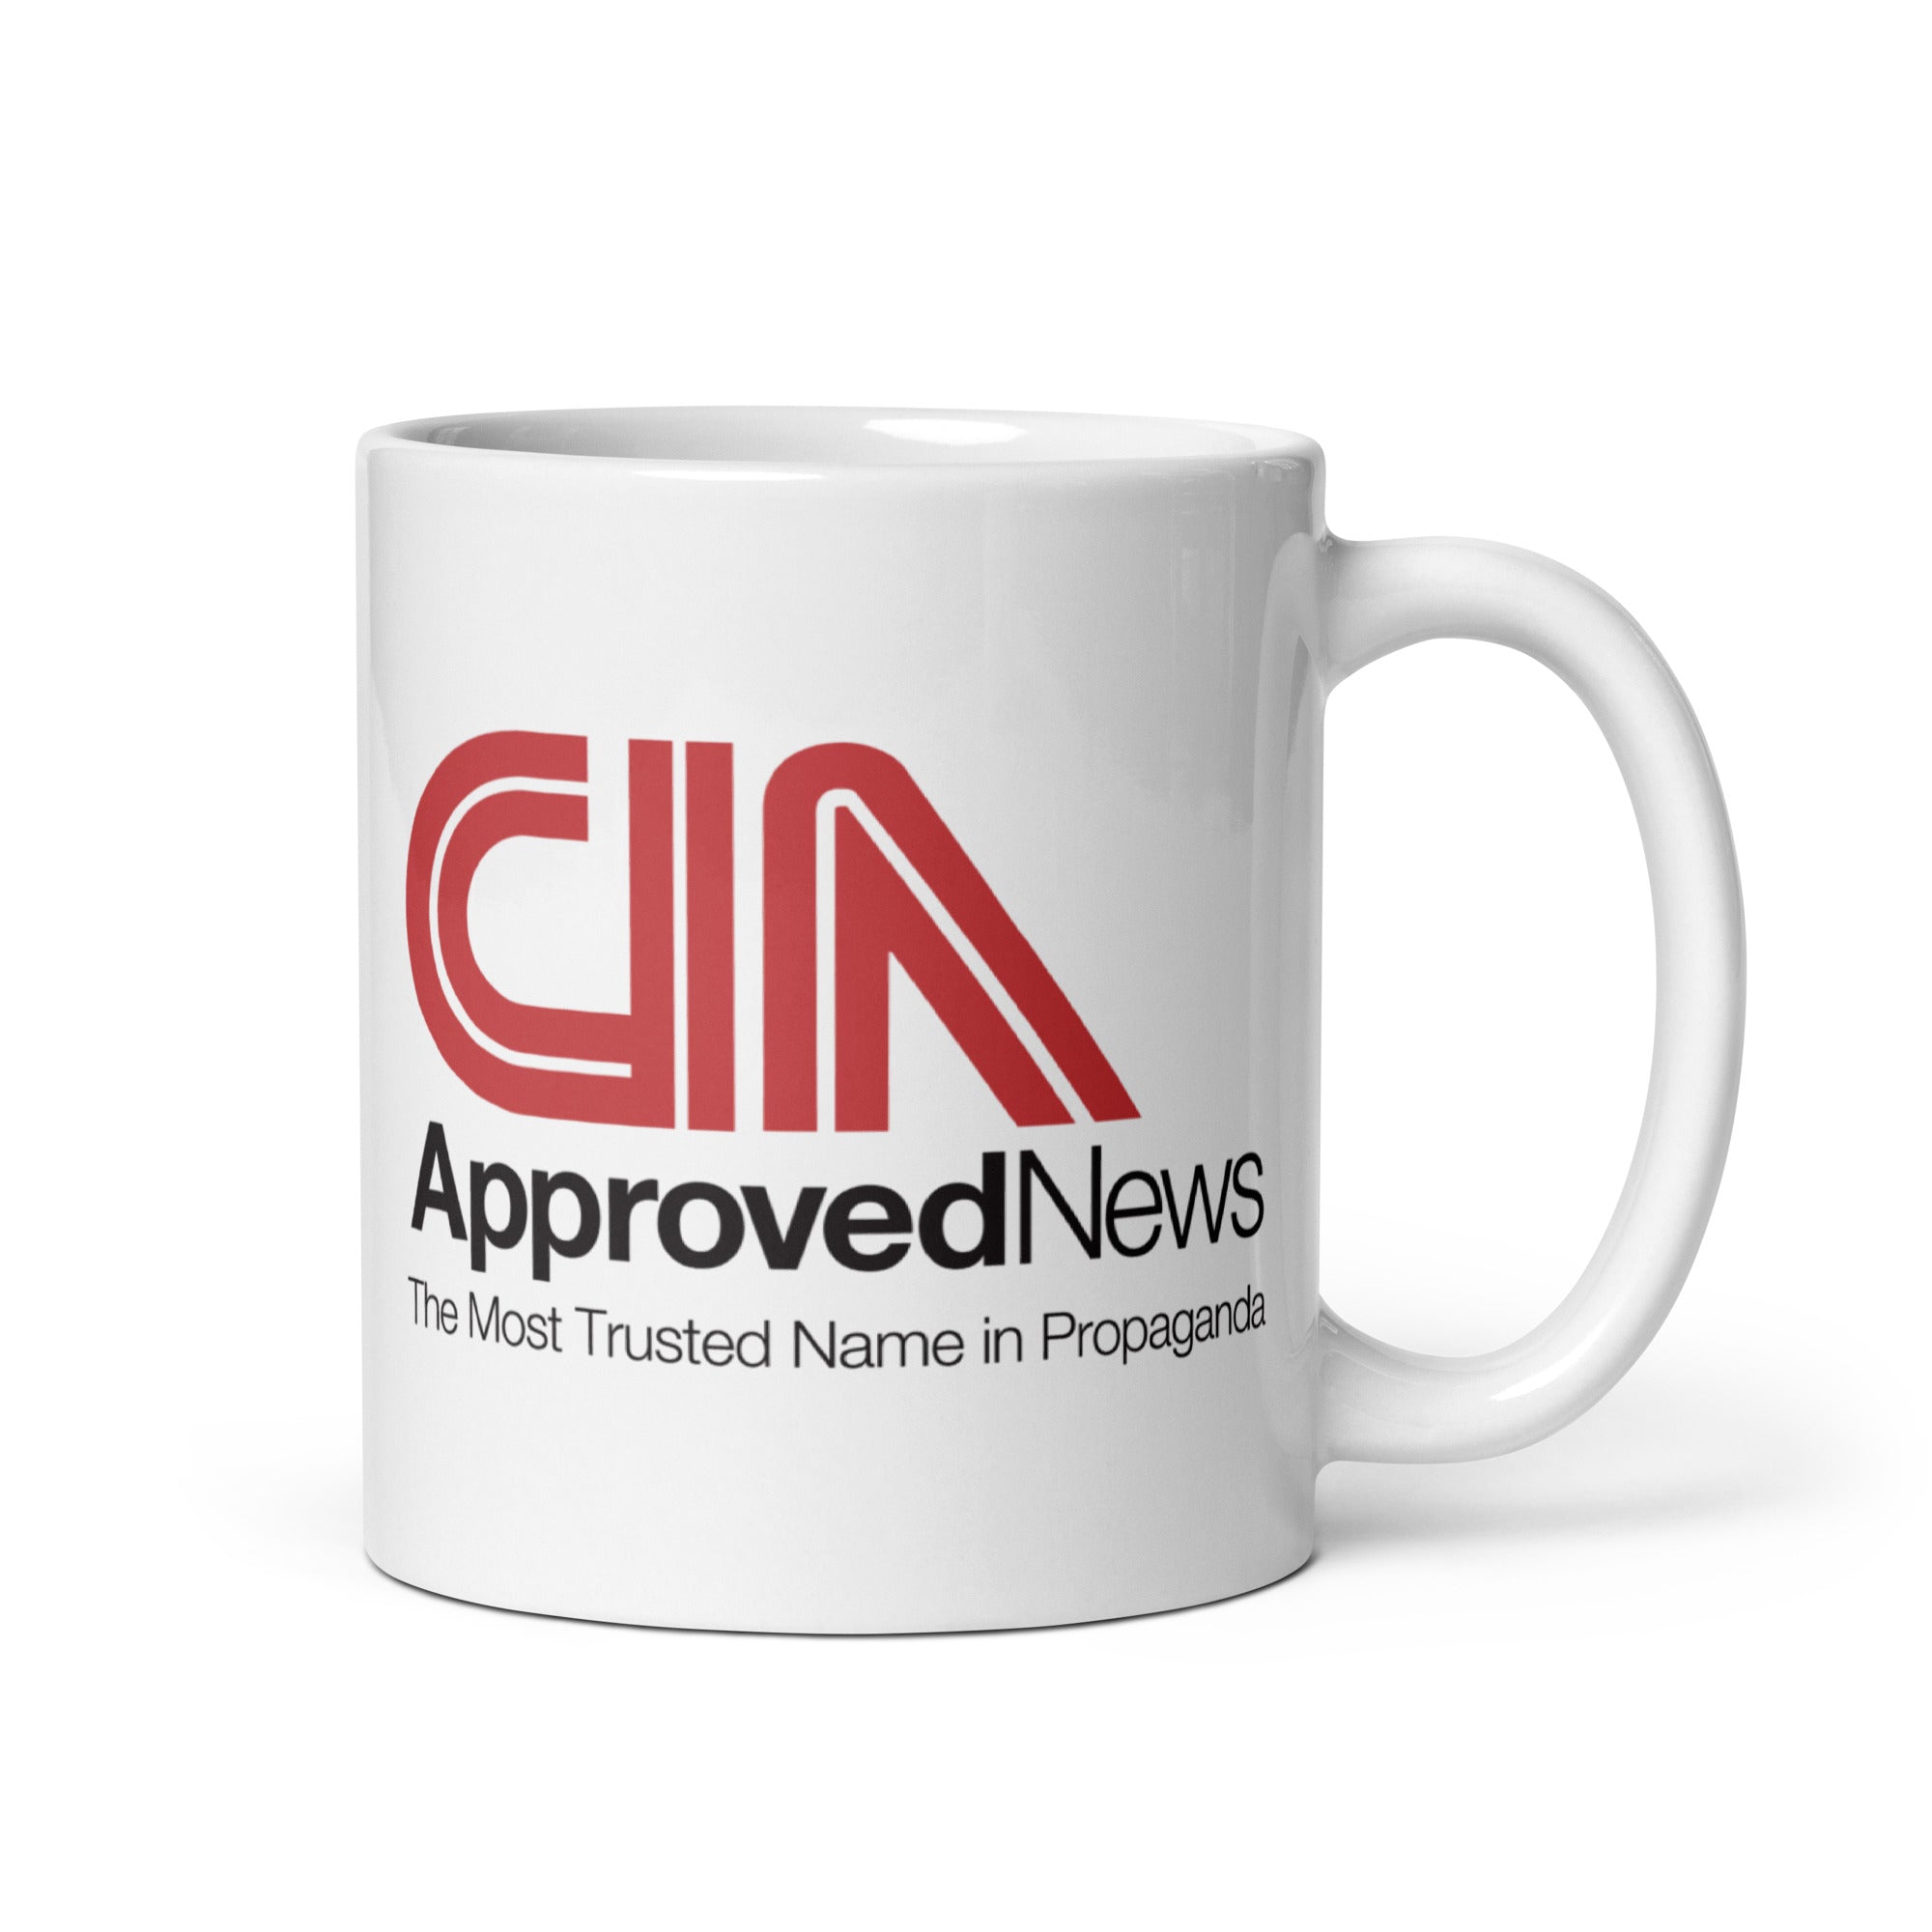 CIA Approved News Mug